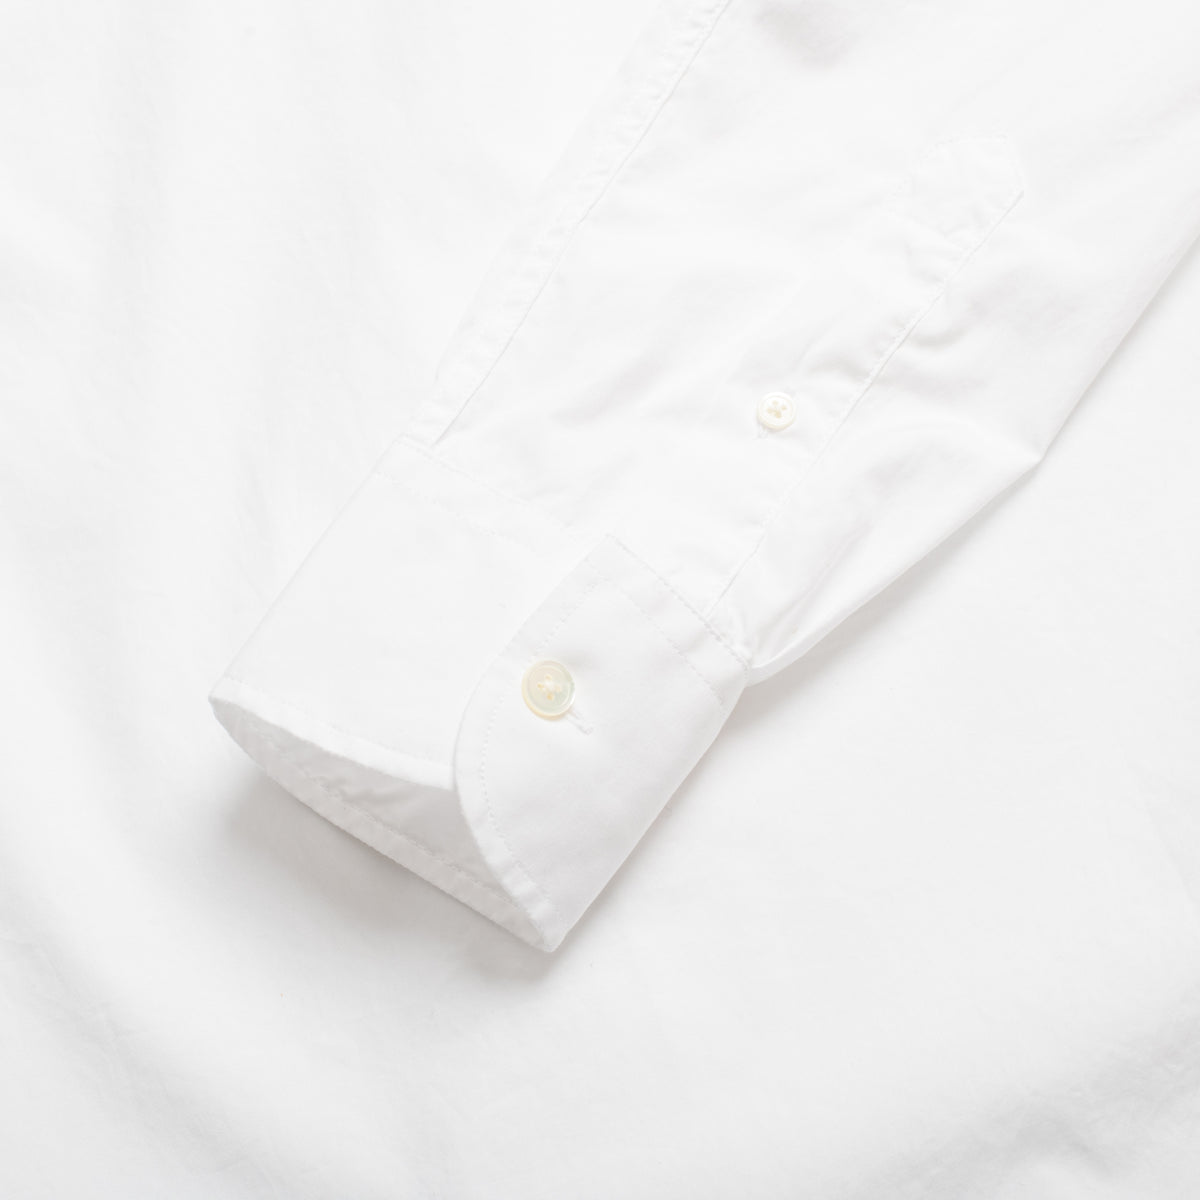 White Poplin Semi-spread Collar Shirt